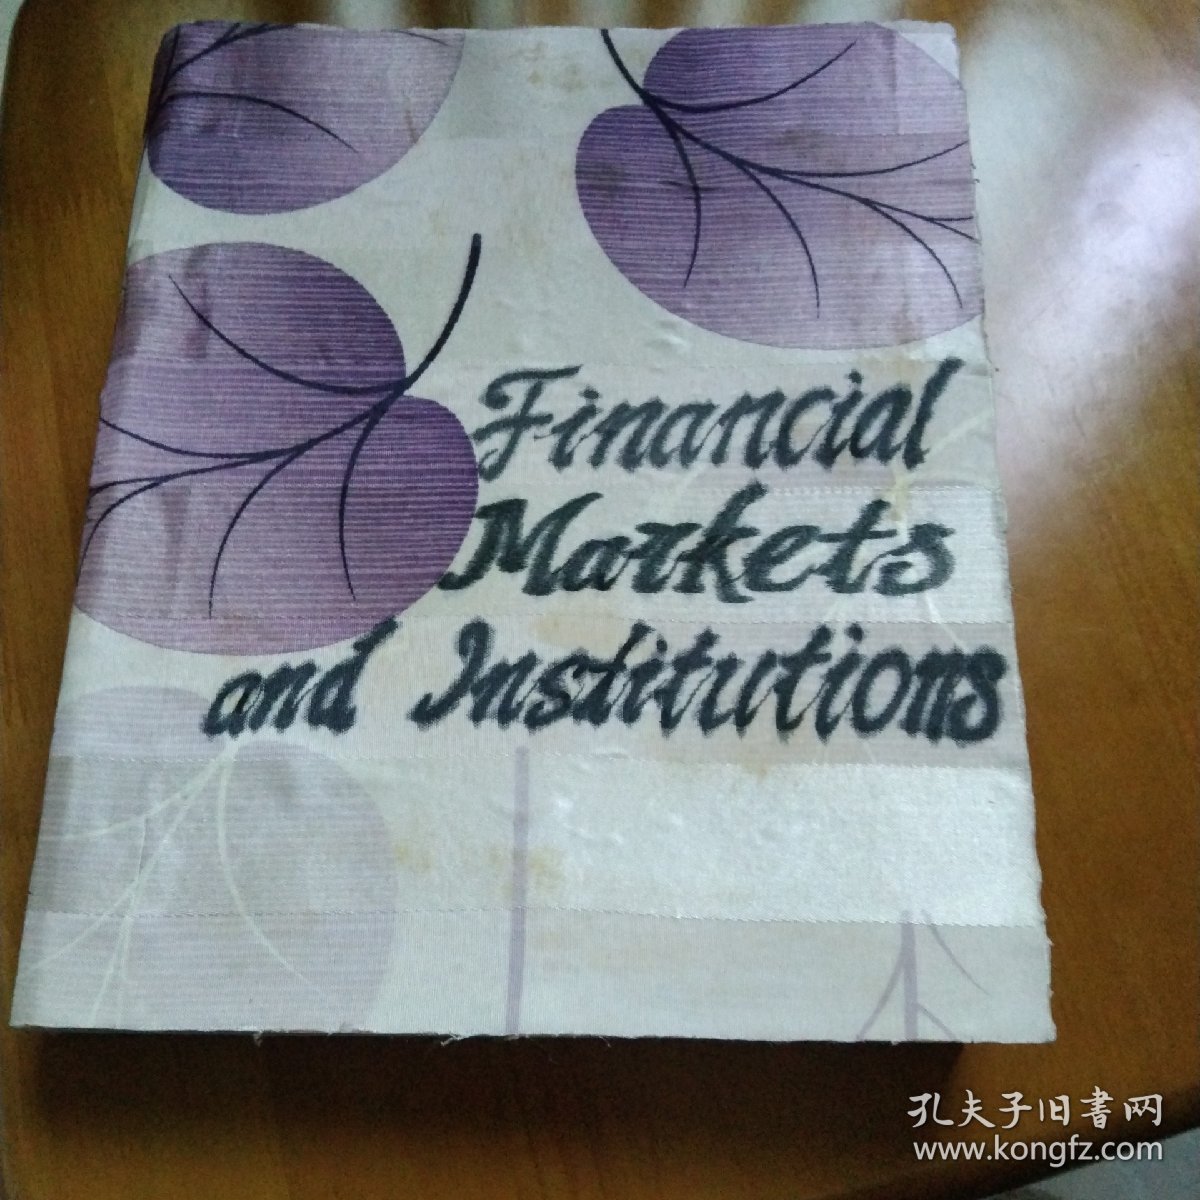 金融市场与金融机构 Financial Markets and Institutions,第7版